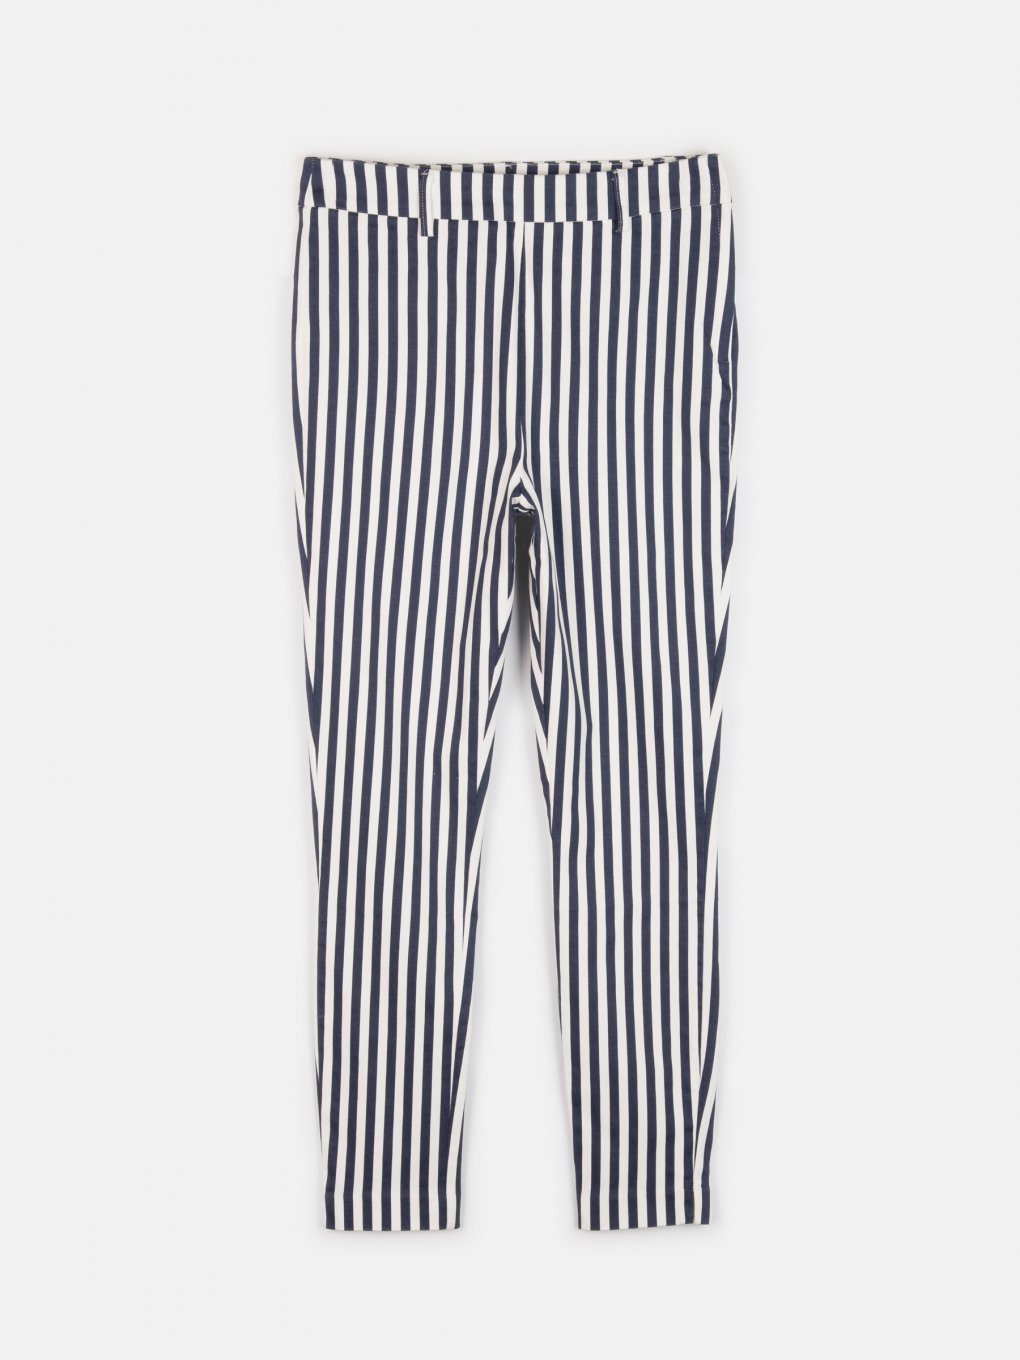 Striped skinny pants